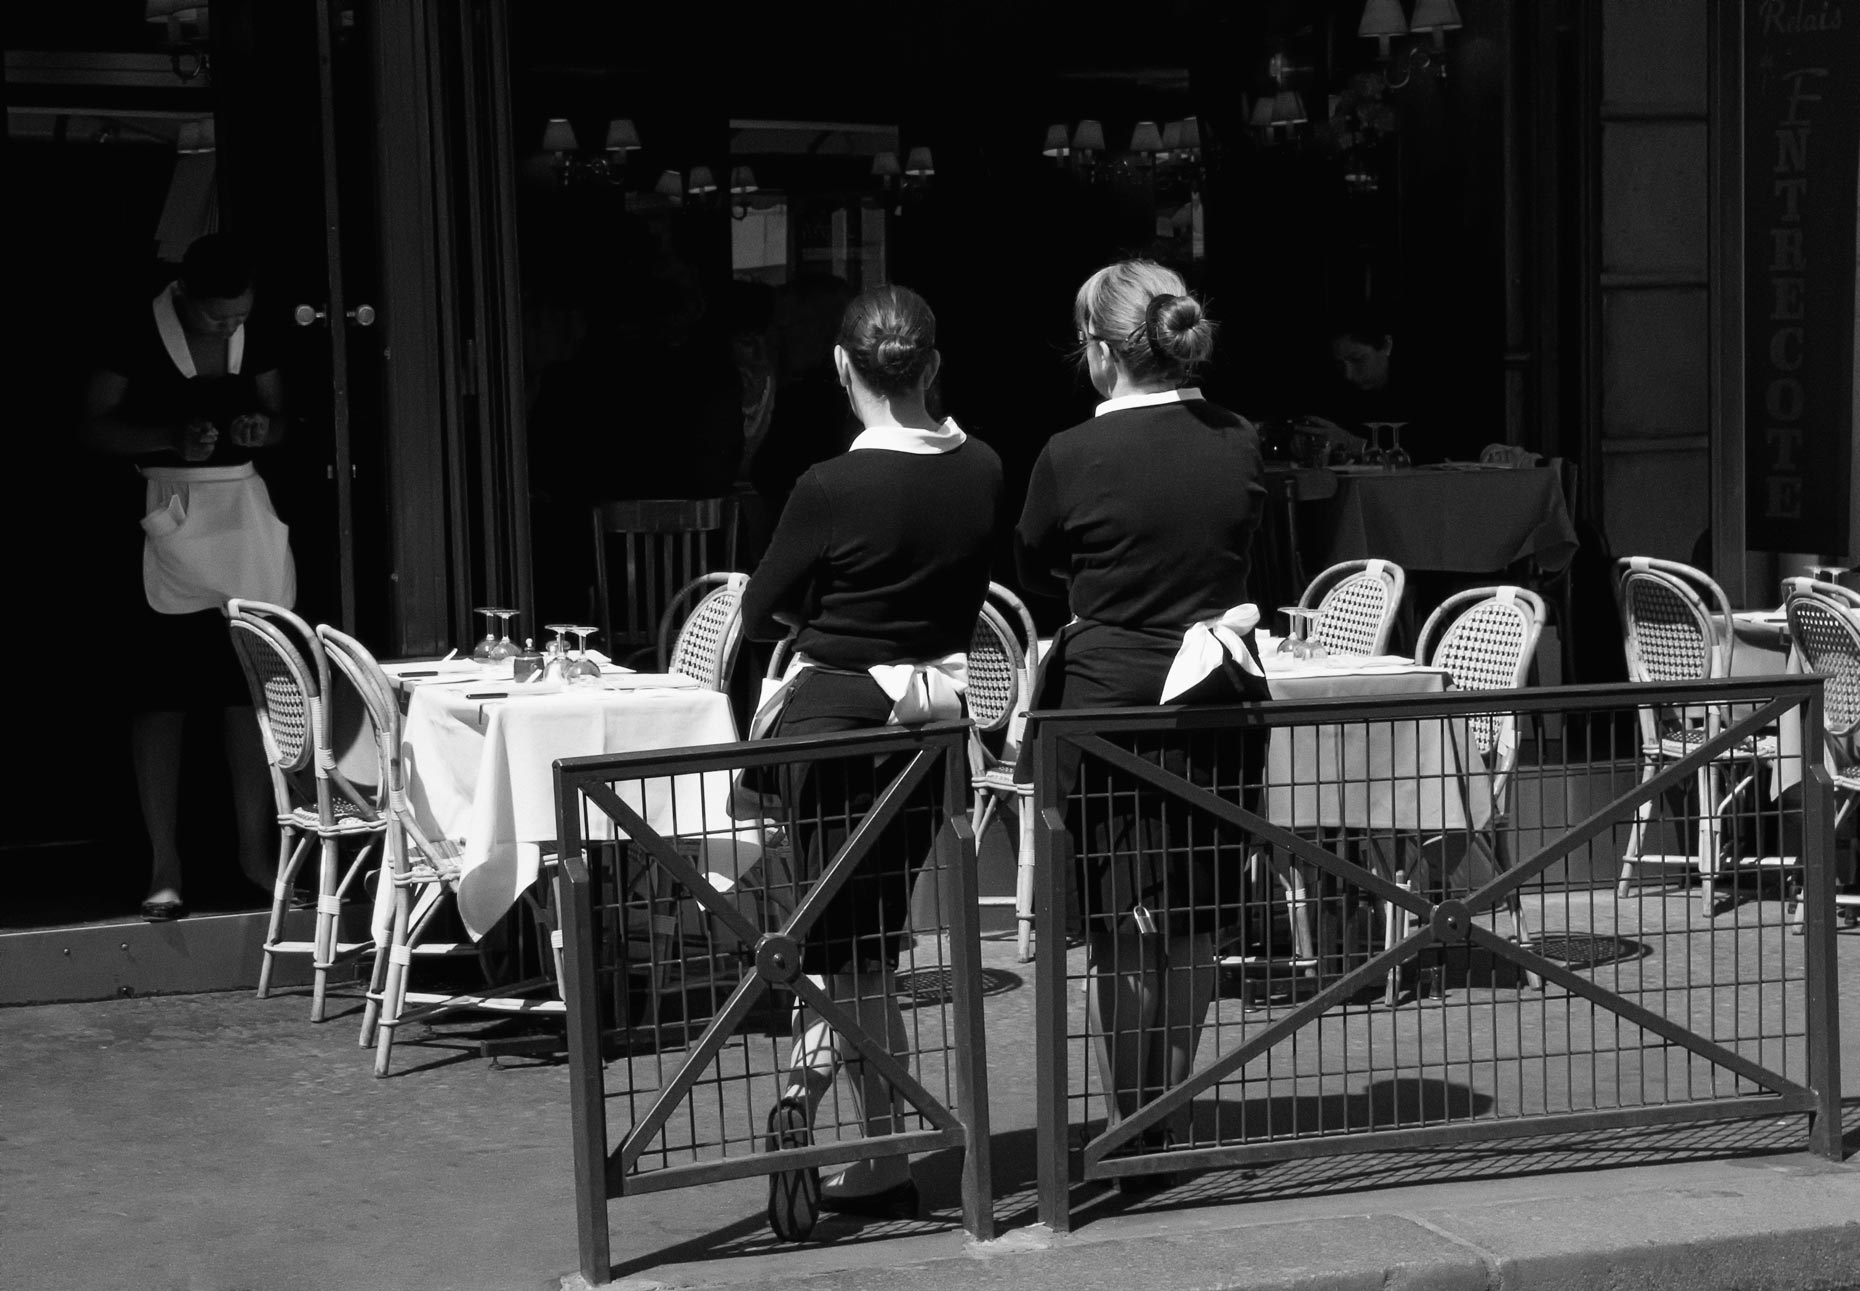 Paris-Photos-French-Waitresses-Laria-Saunders.jpg